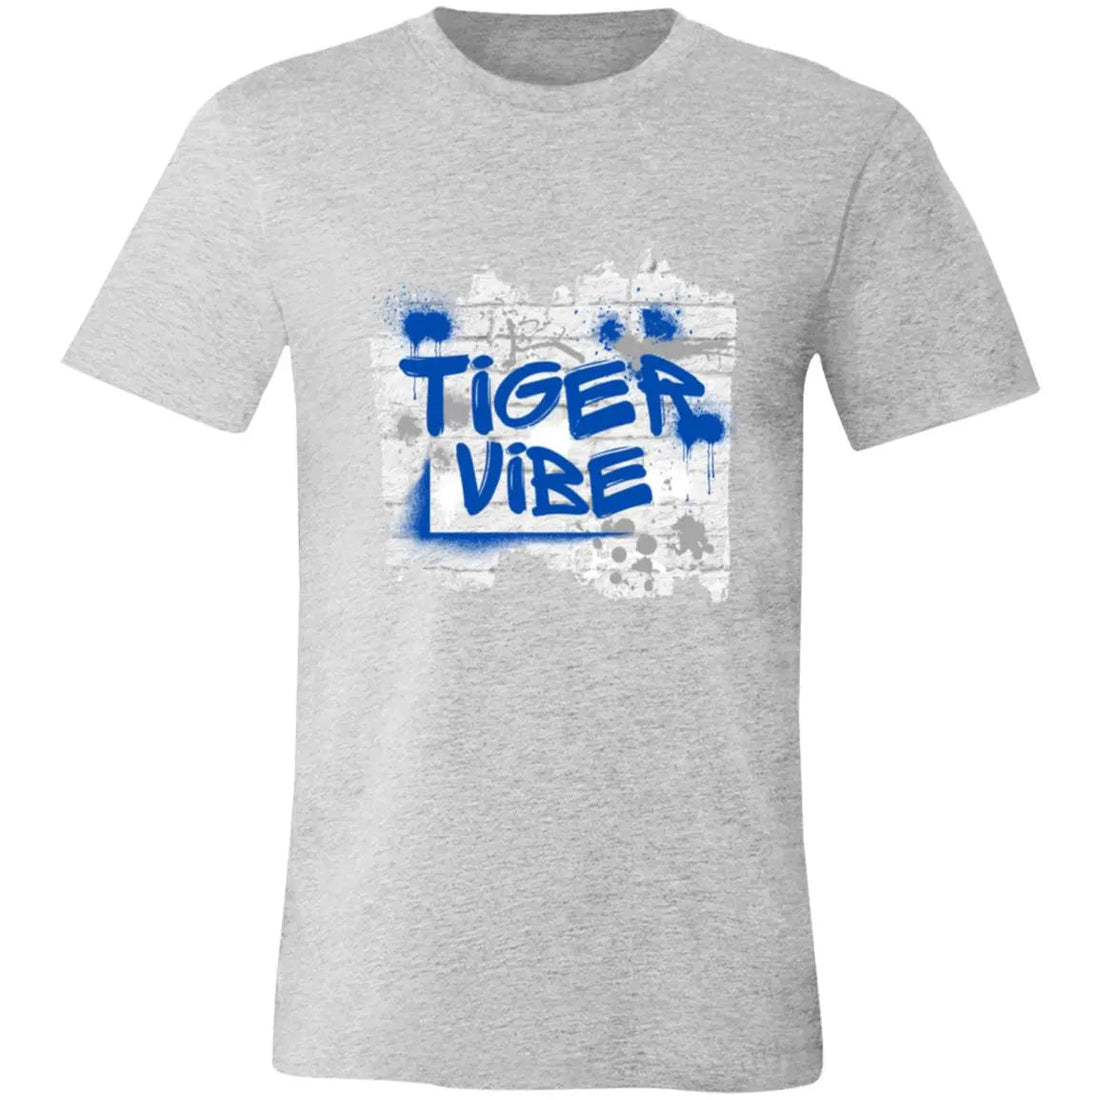 Tiger Vibe Short-Sleeve T-Shirt - T-Shirts - Positively Sassy - Tiger Vibe Short-Sleeve T-Shirt